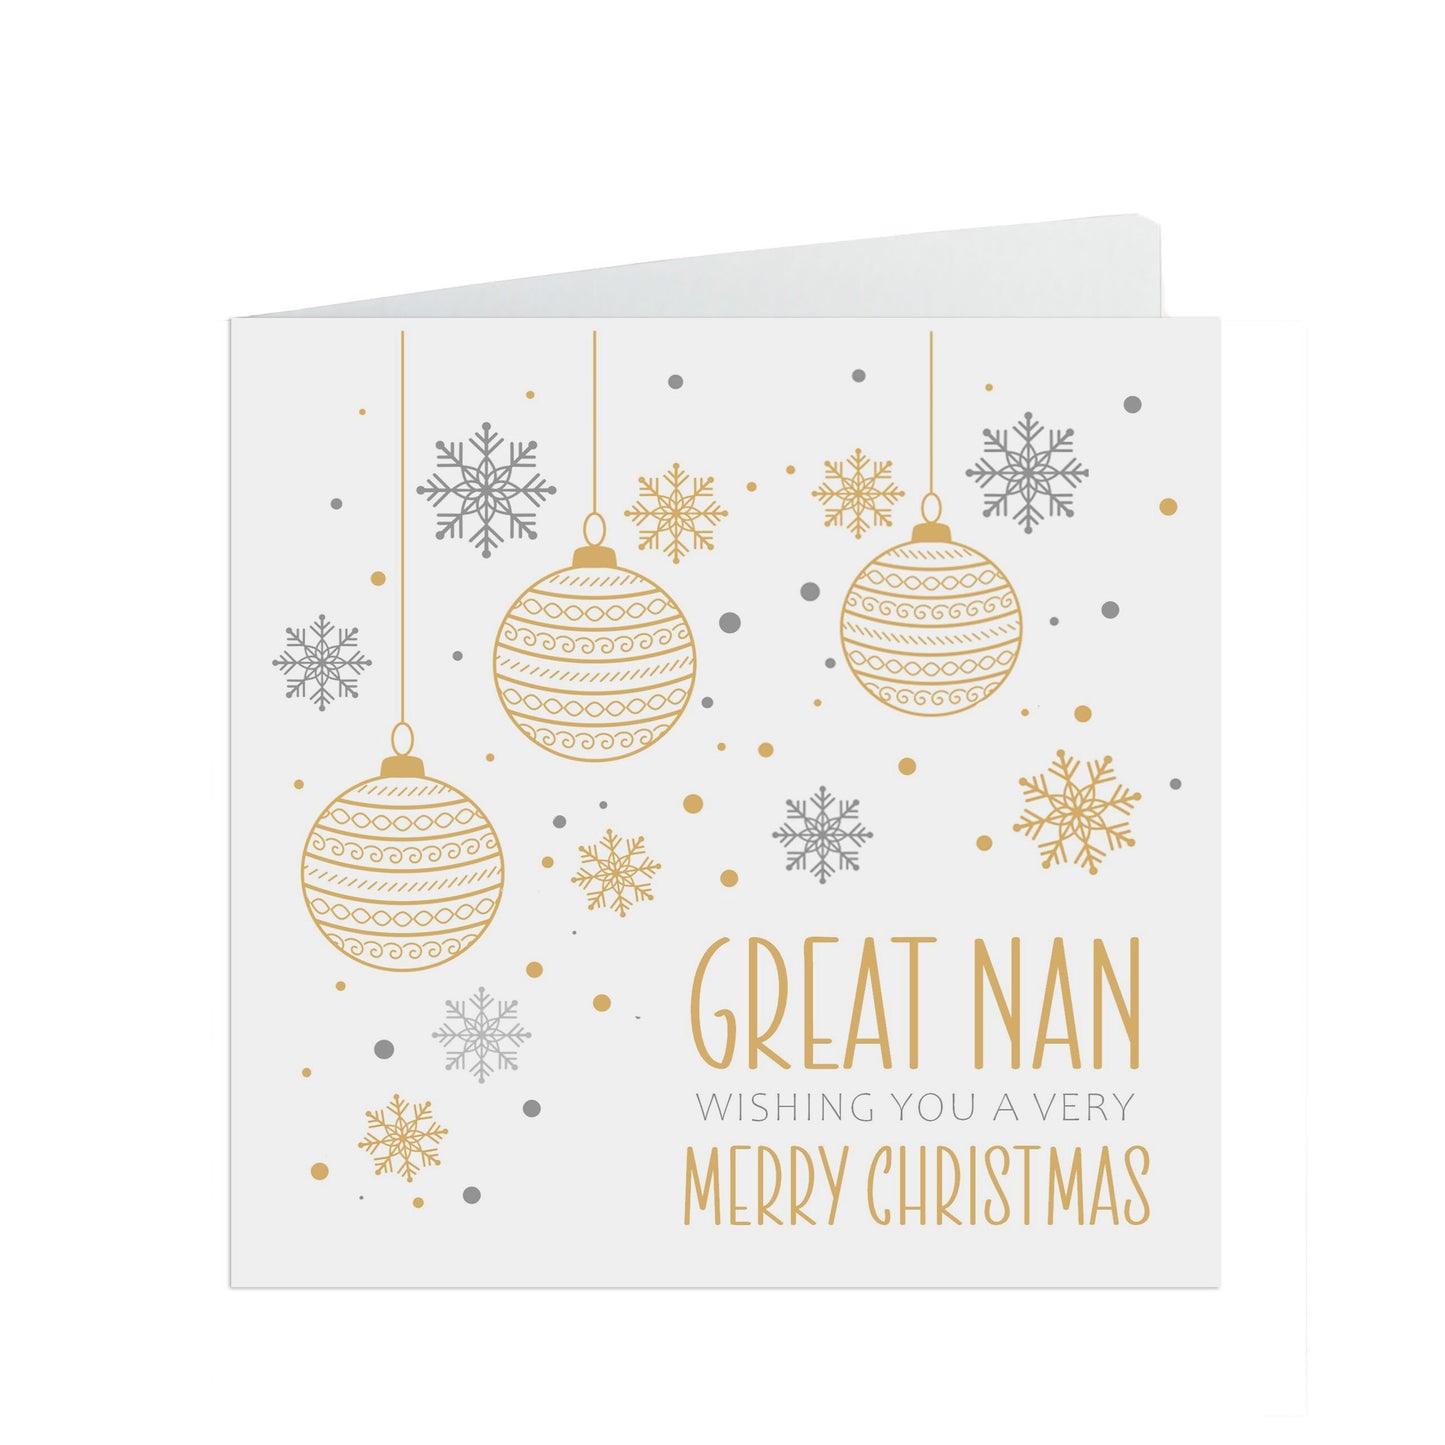 Great Nan Christmas Card, Gold Bauble Design